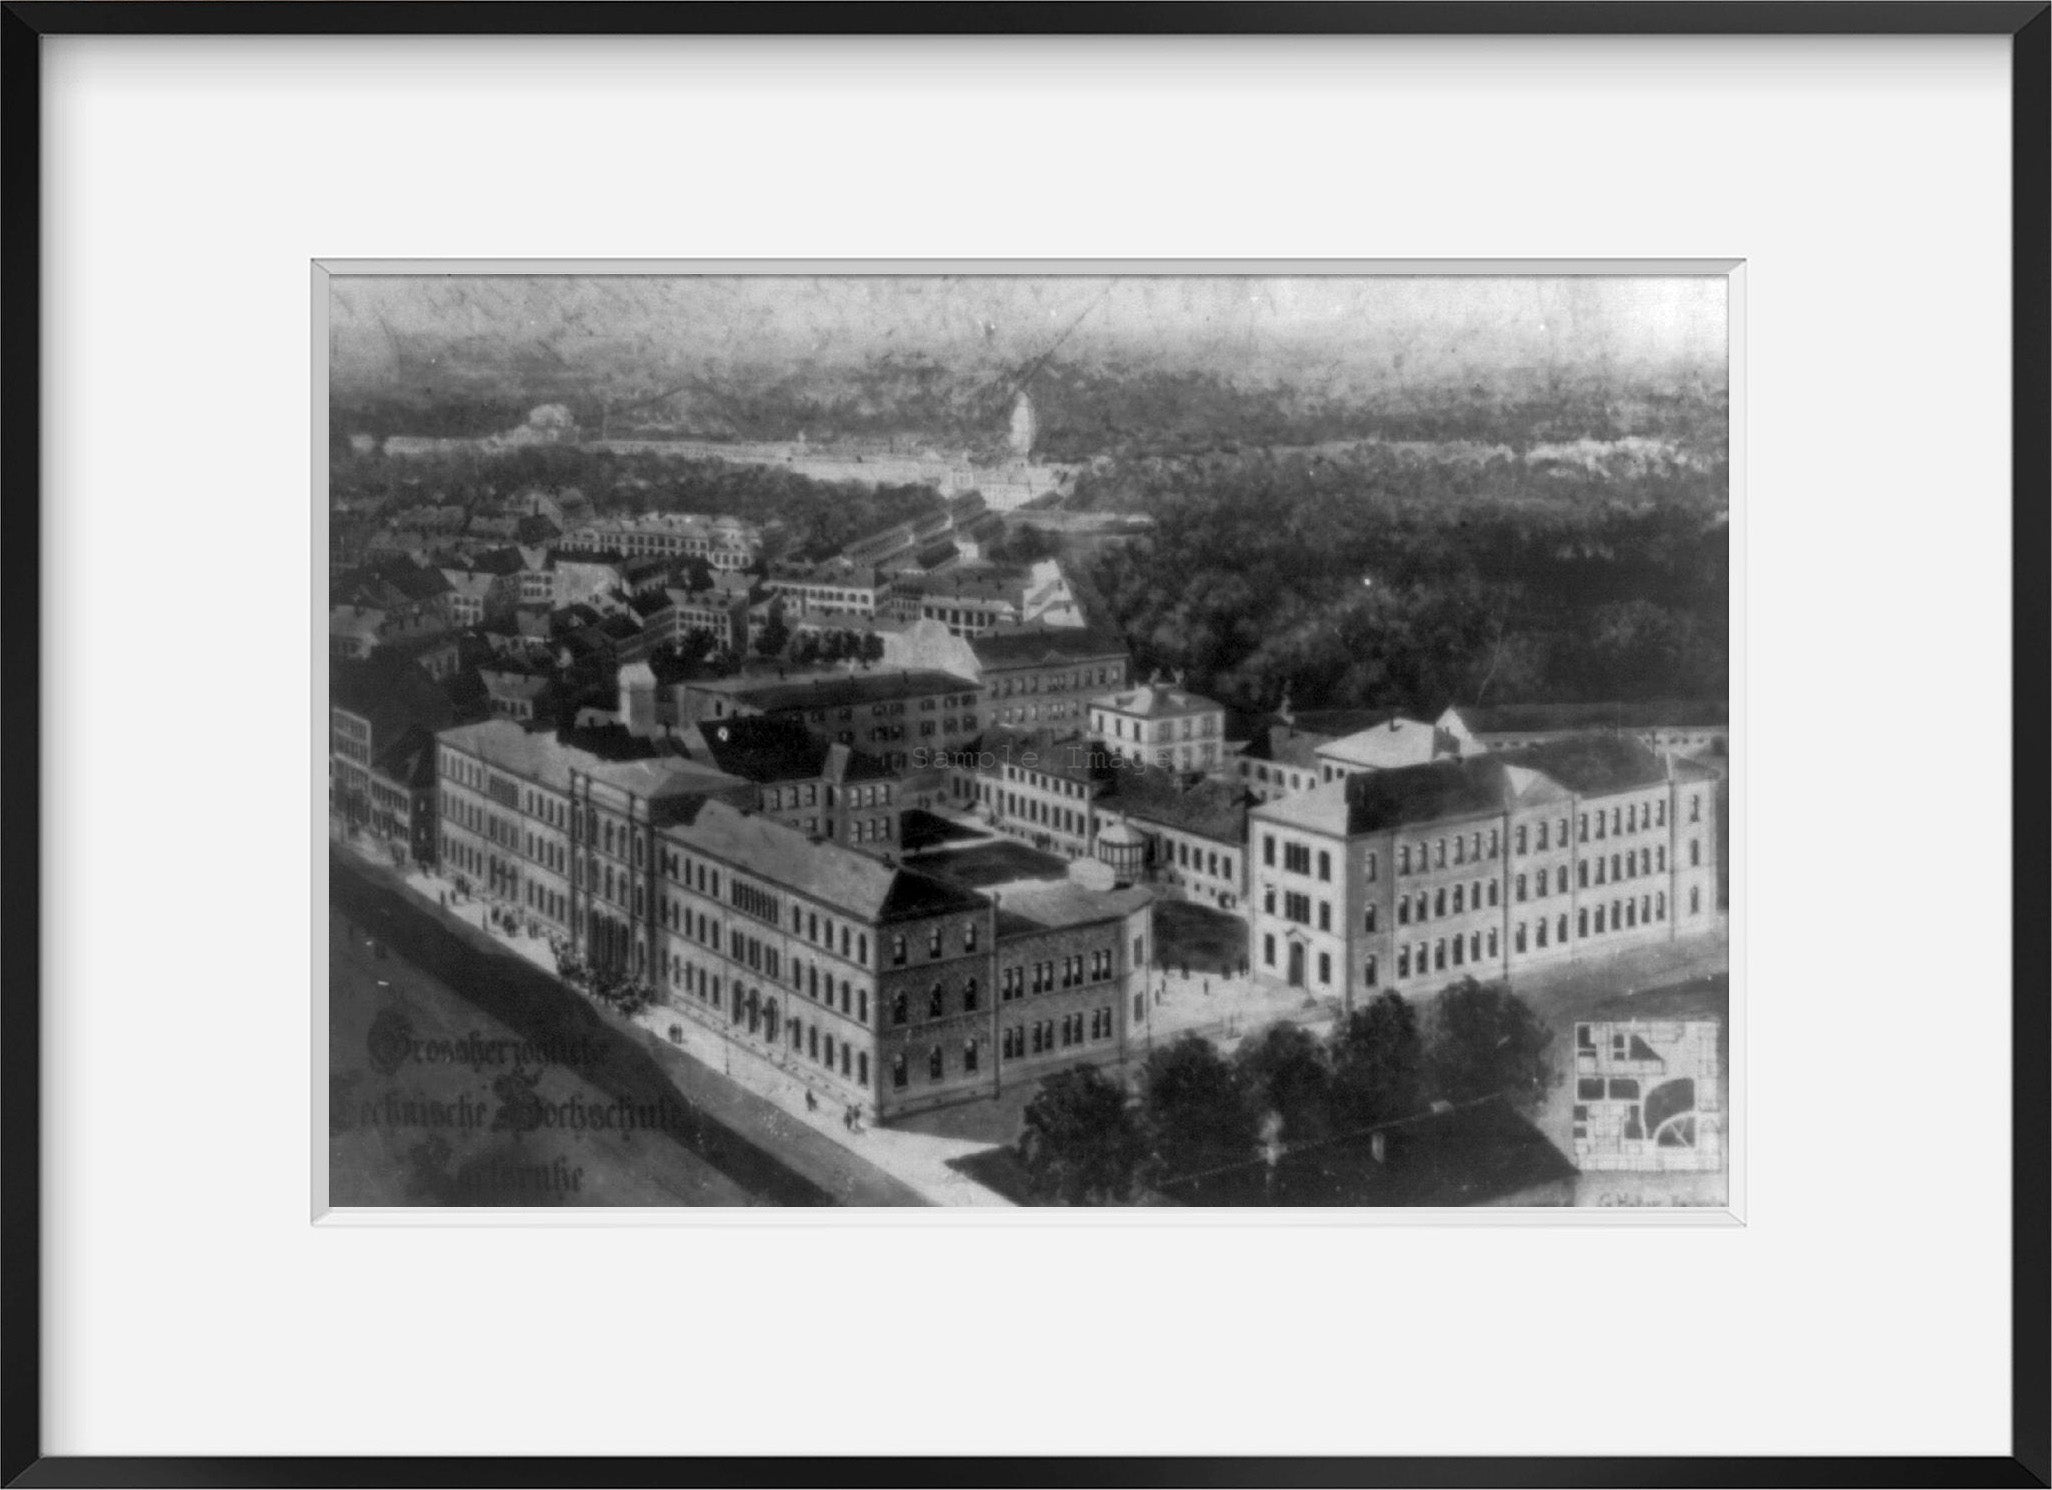 Photo: Technische Hochschule, Fridericiana, Germany, 1860